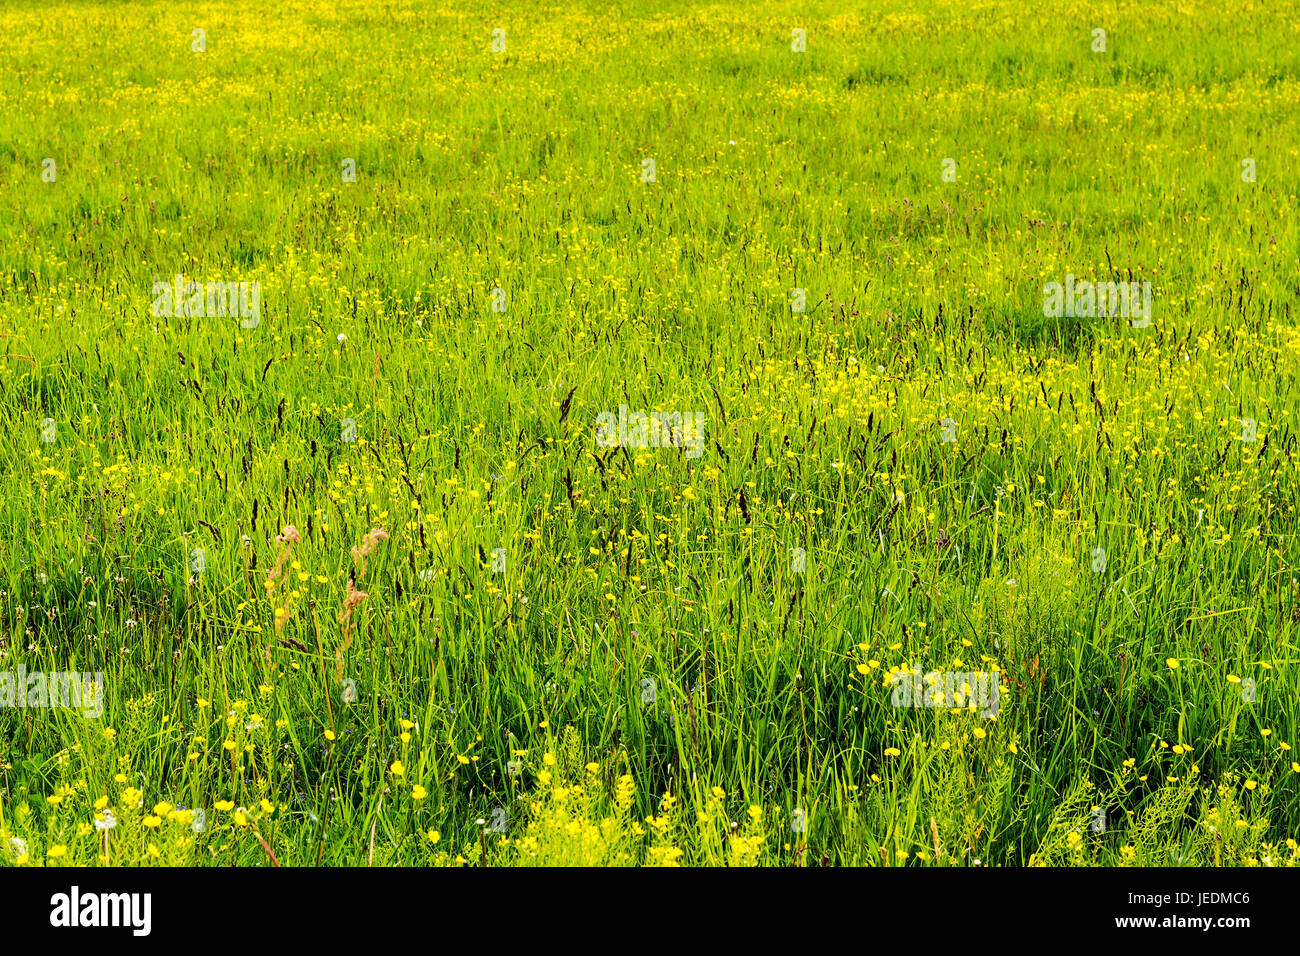 Summer field, green juicy grass, buttercups and dark spikelets Stock Photo